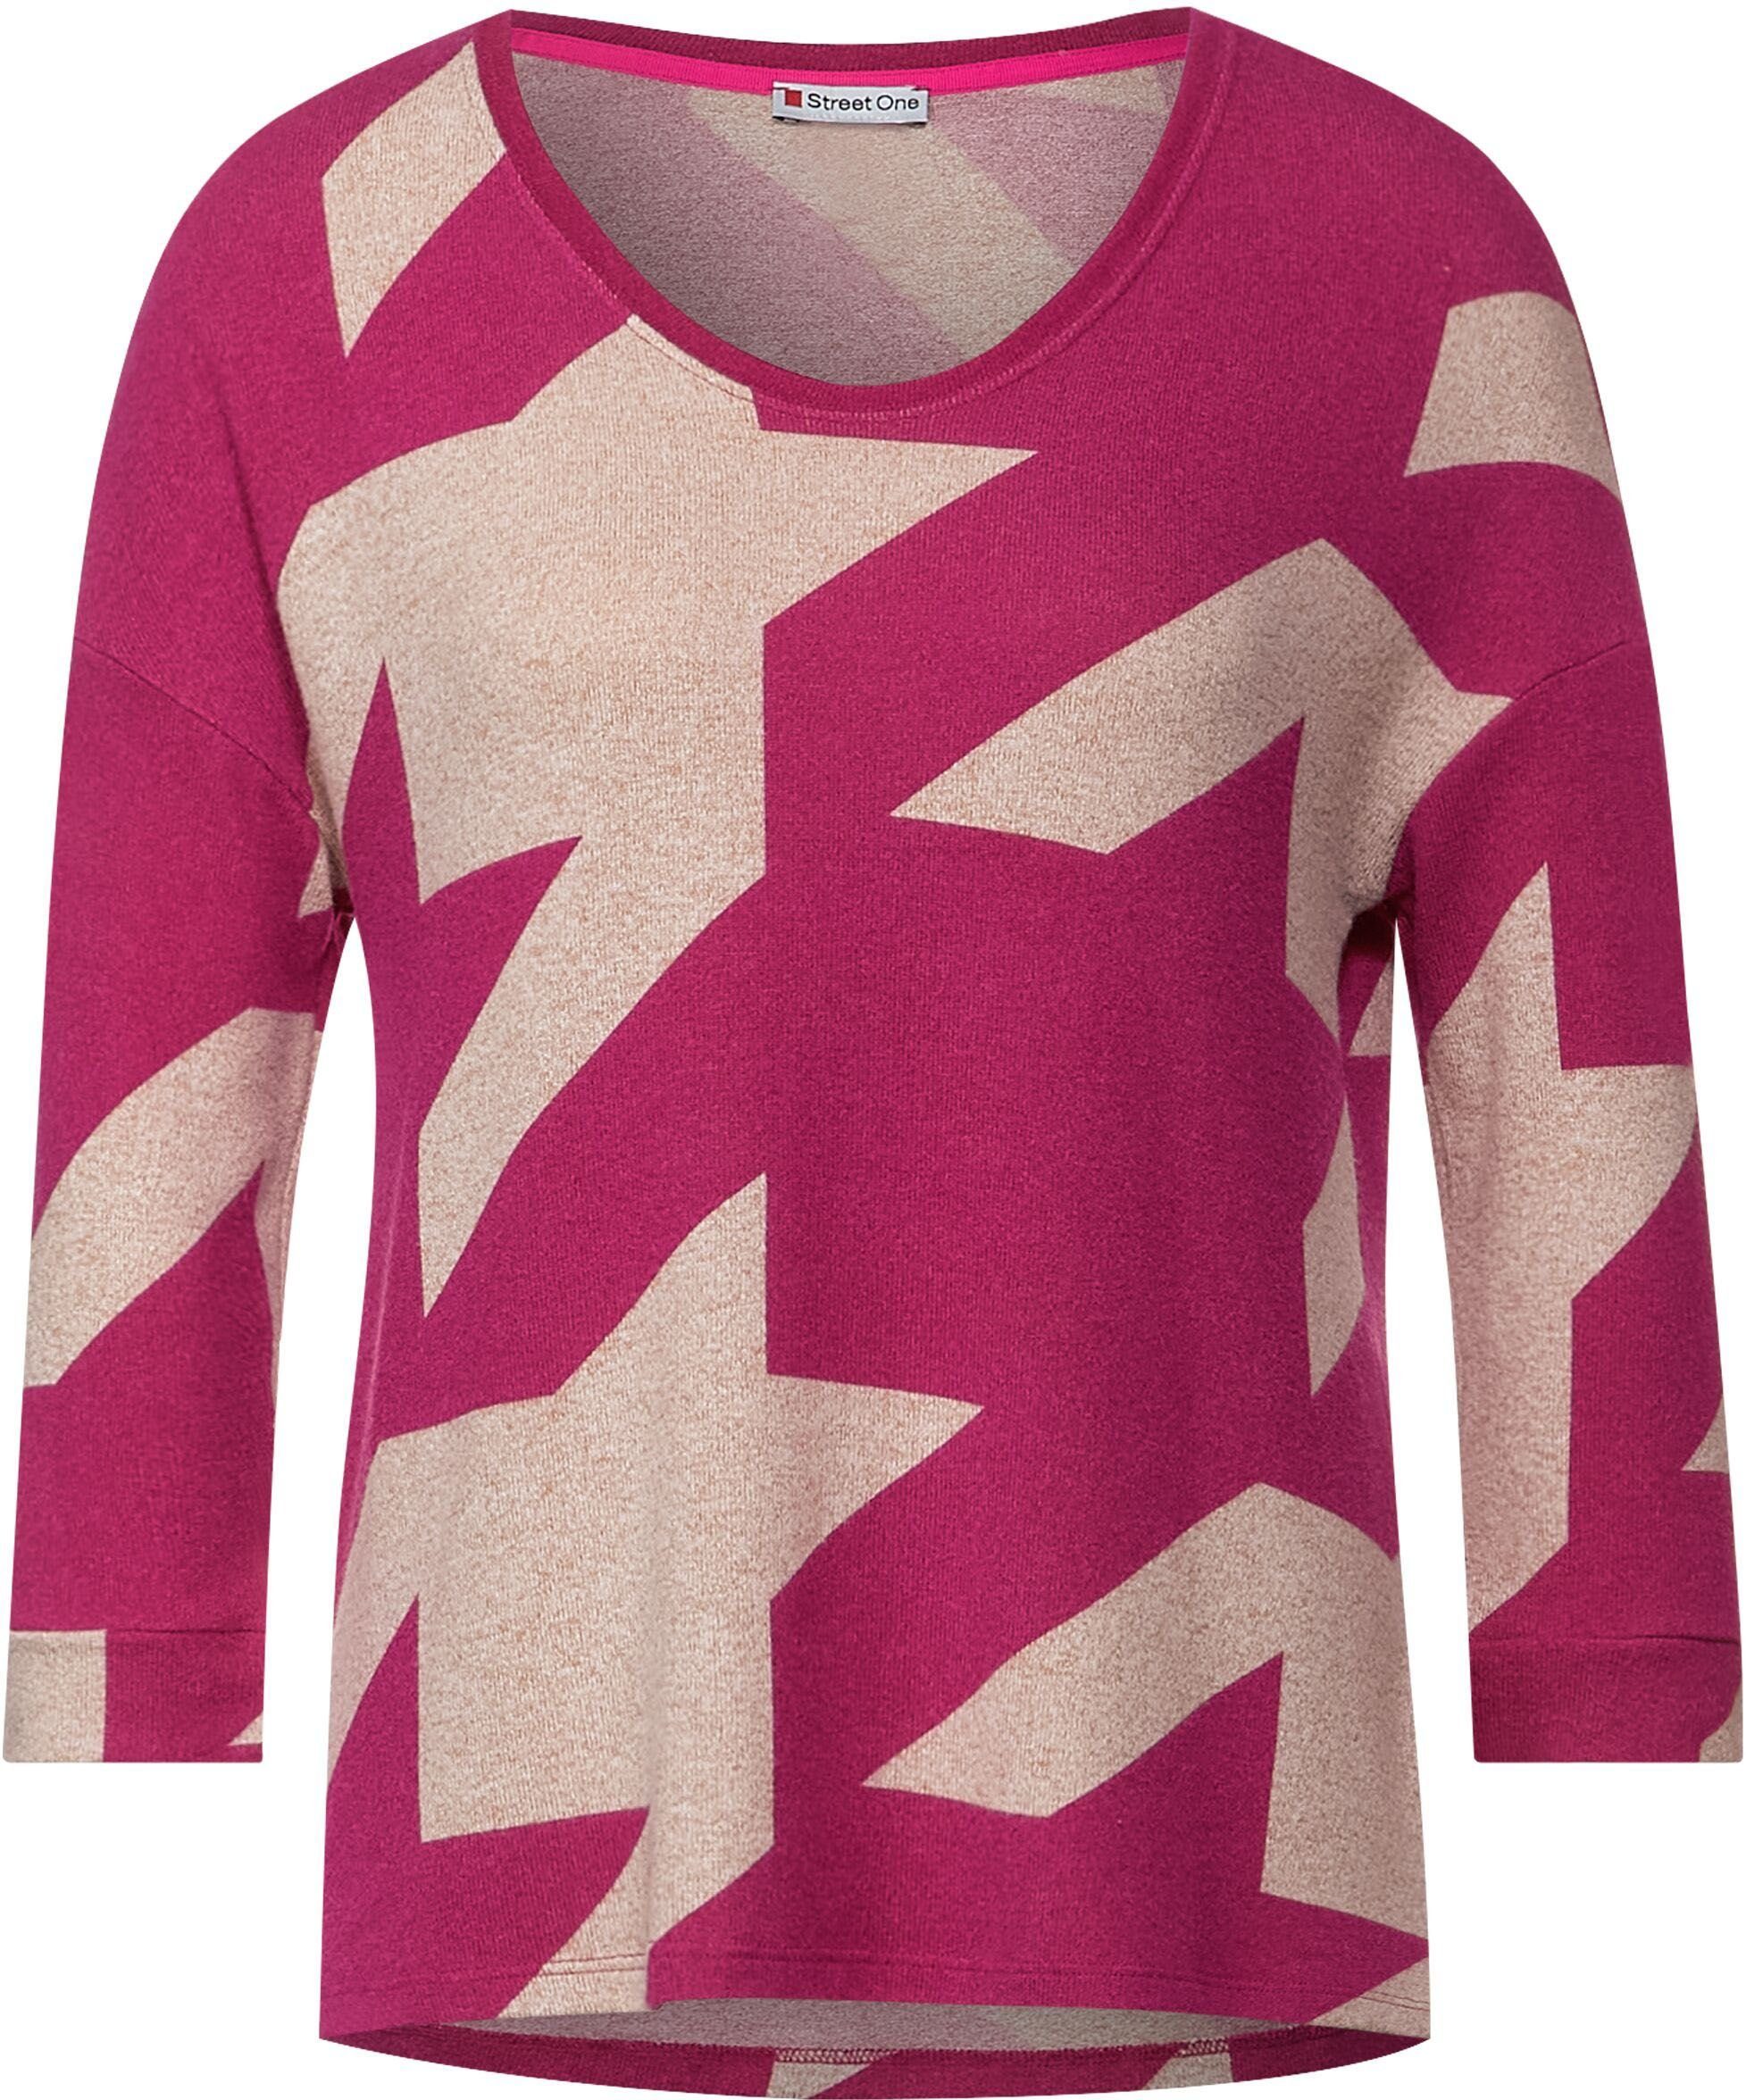 STREET ONE 3/4-Arm-Shirt melange pink Hahnentrittmuster lavish mit